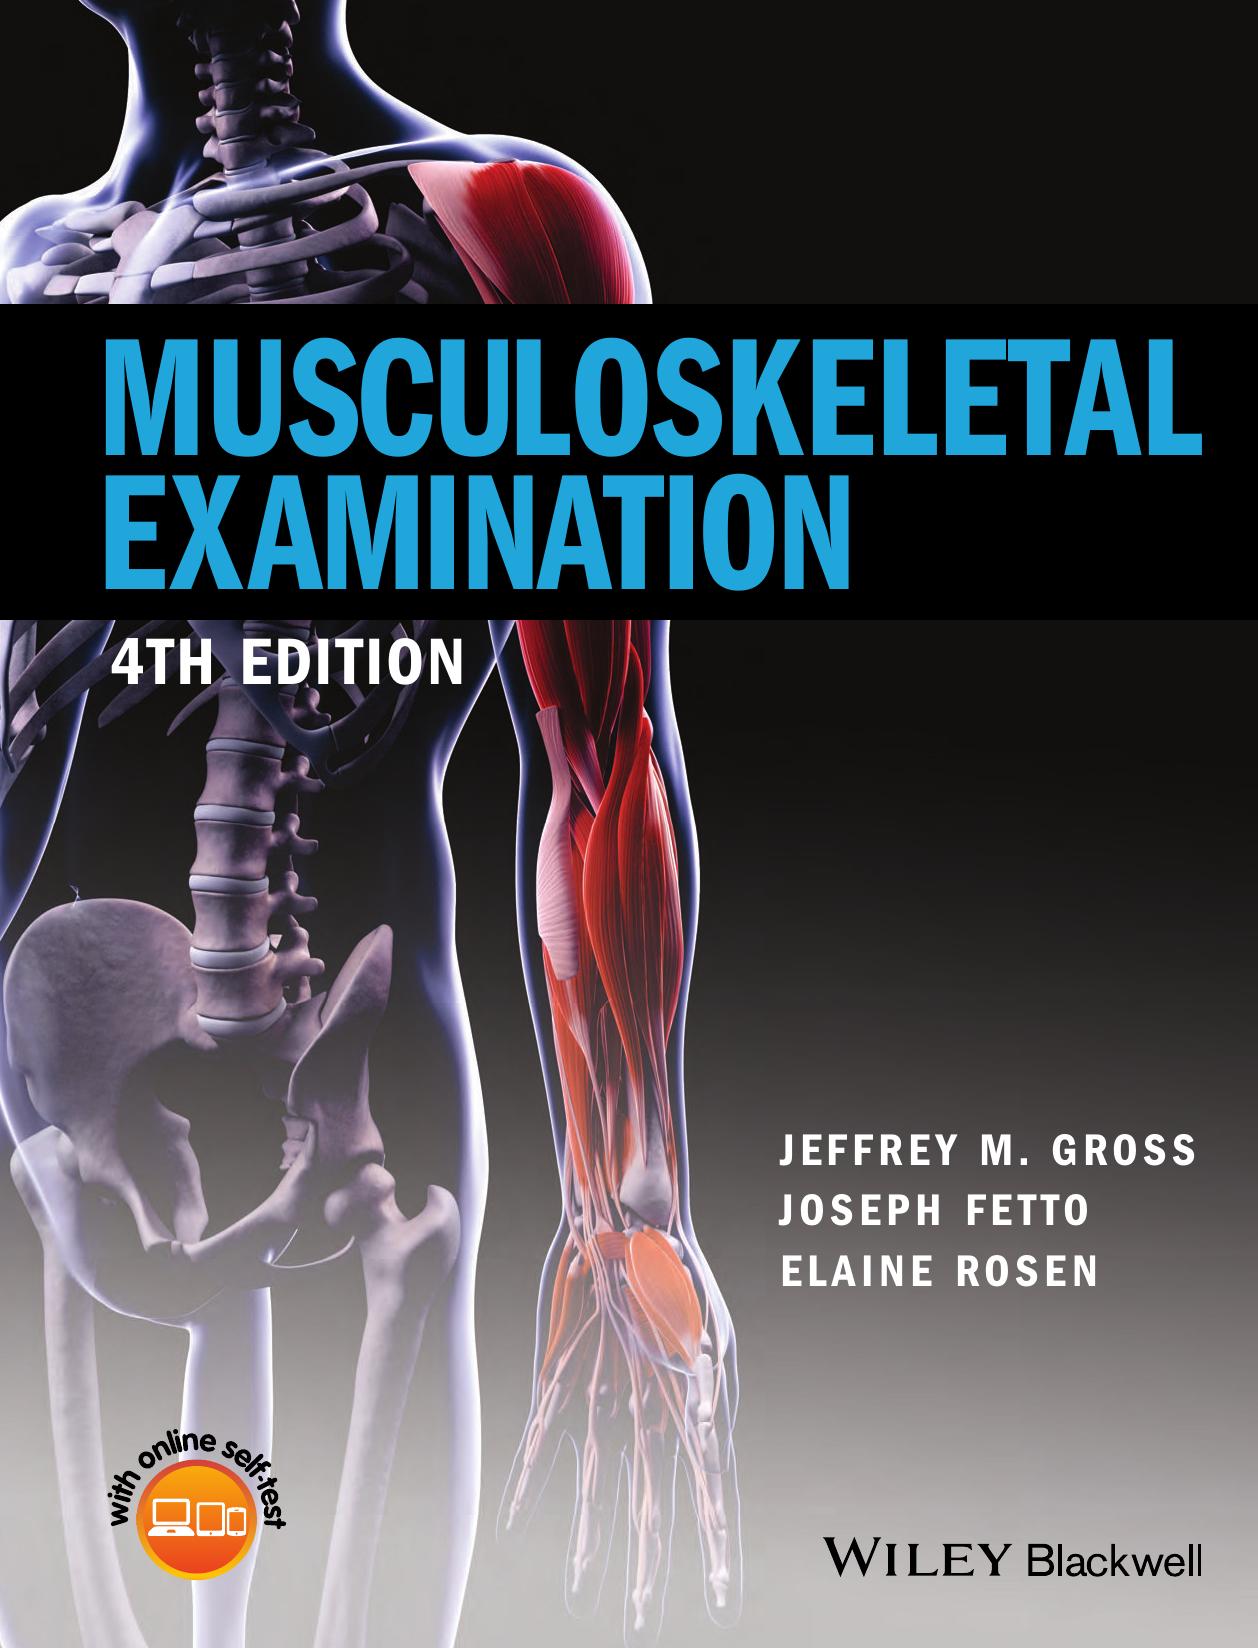 Musculoskeletal Examination 4th Edition 2016